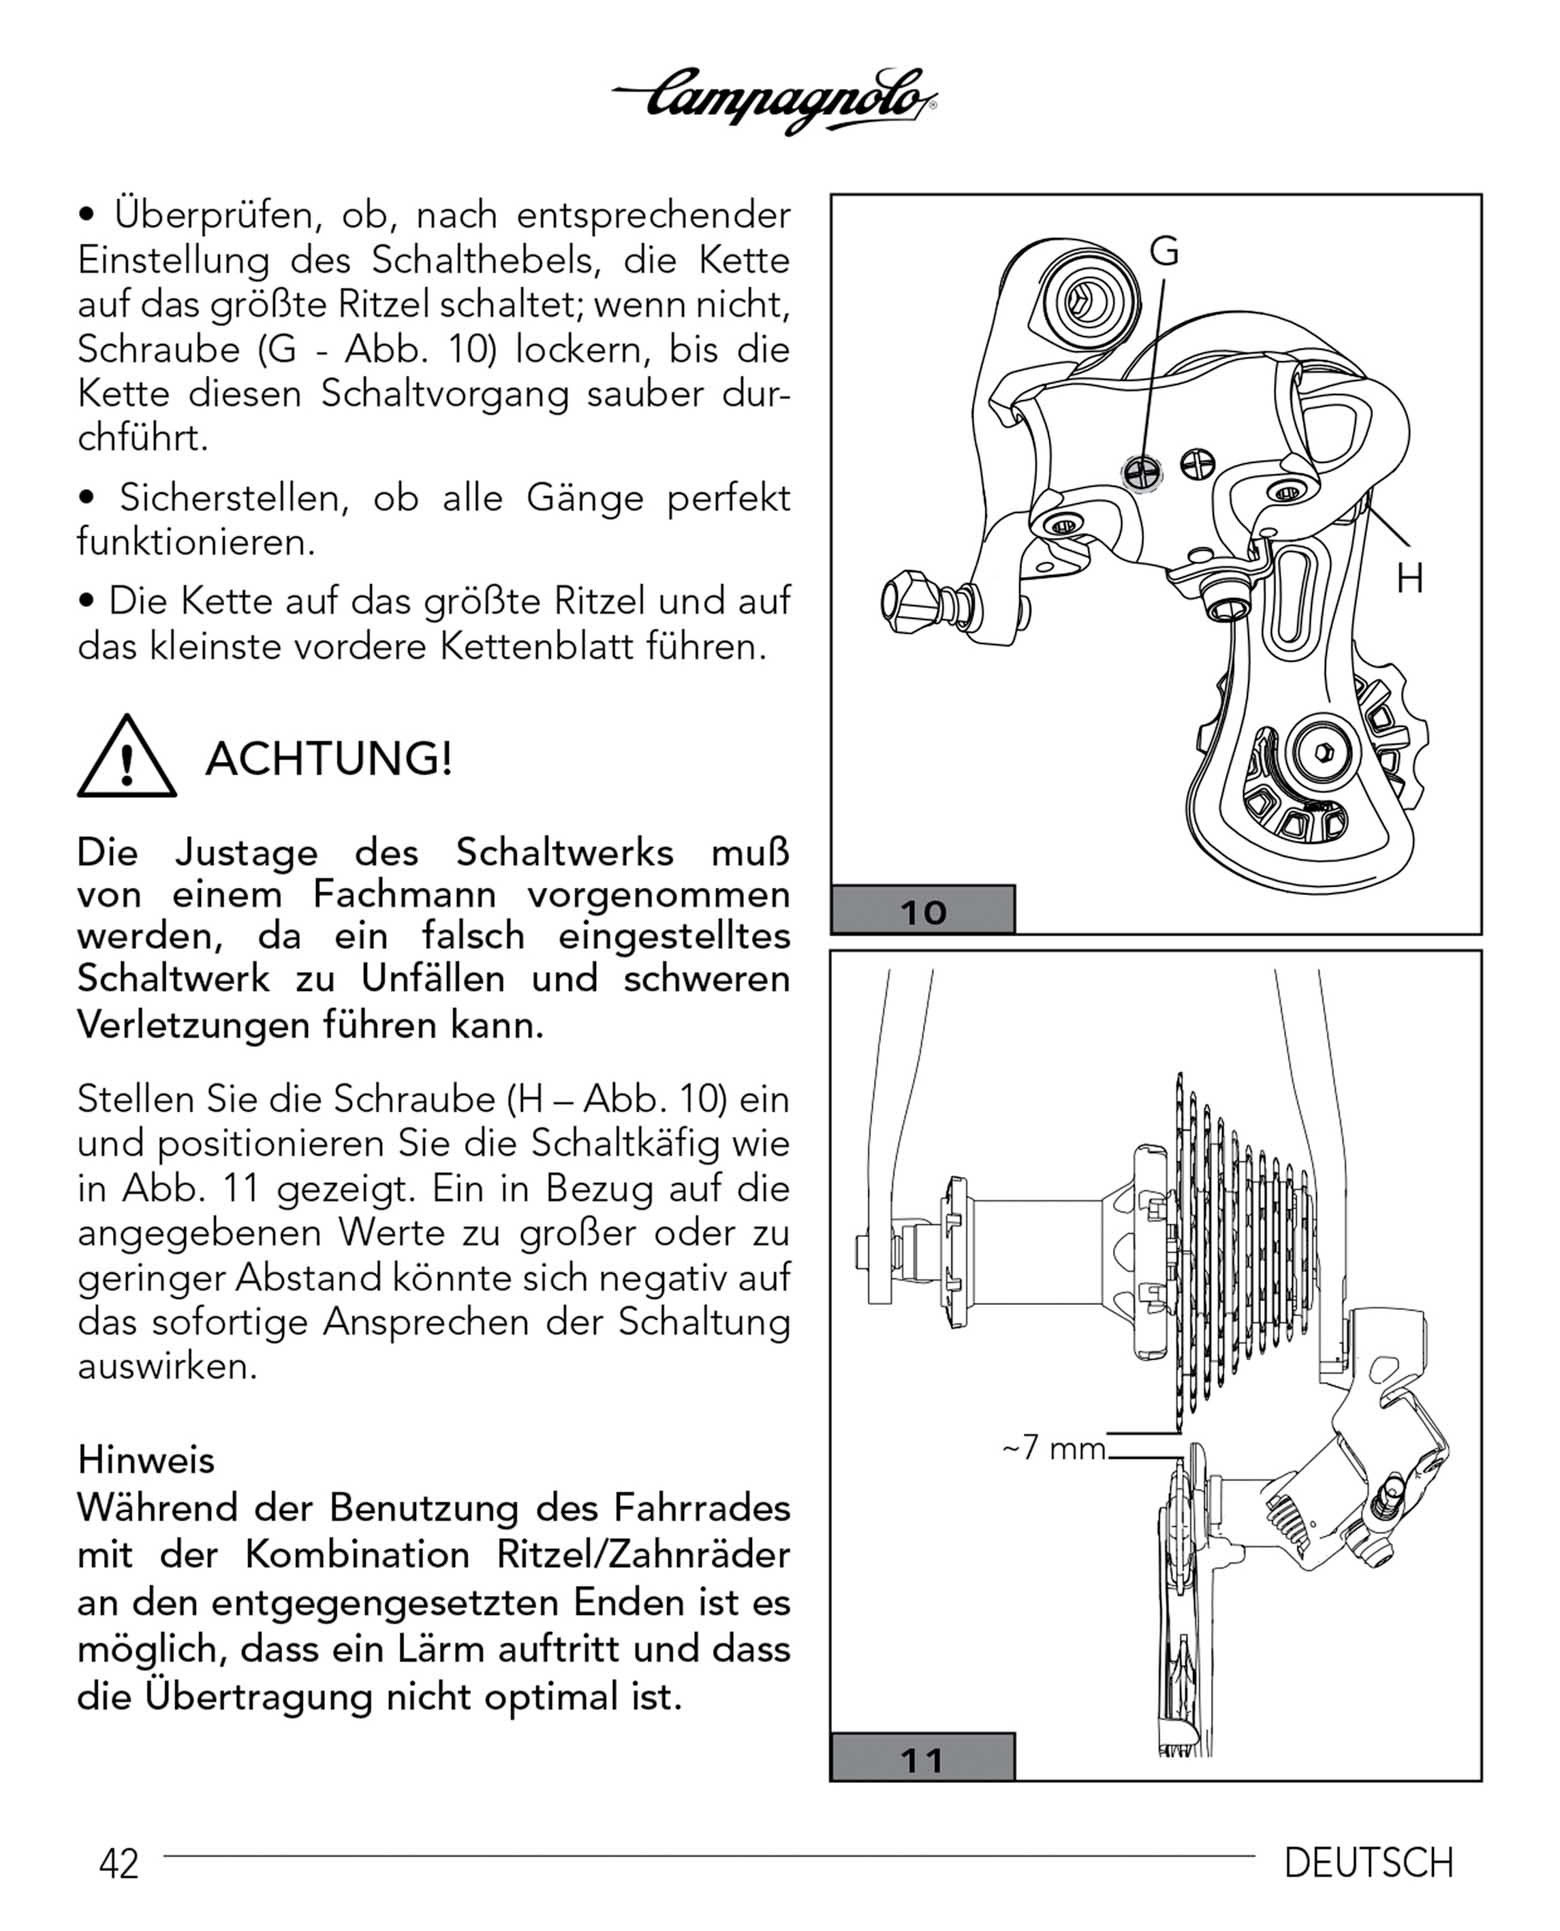 Campagnolo instructions - 7225475 Rear Der Usr Man ('01/2015') page 042 main image